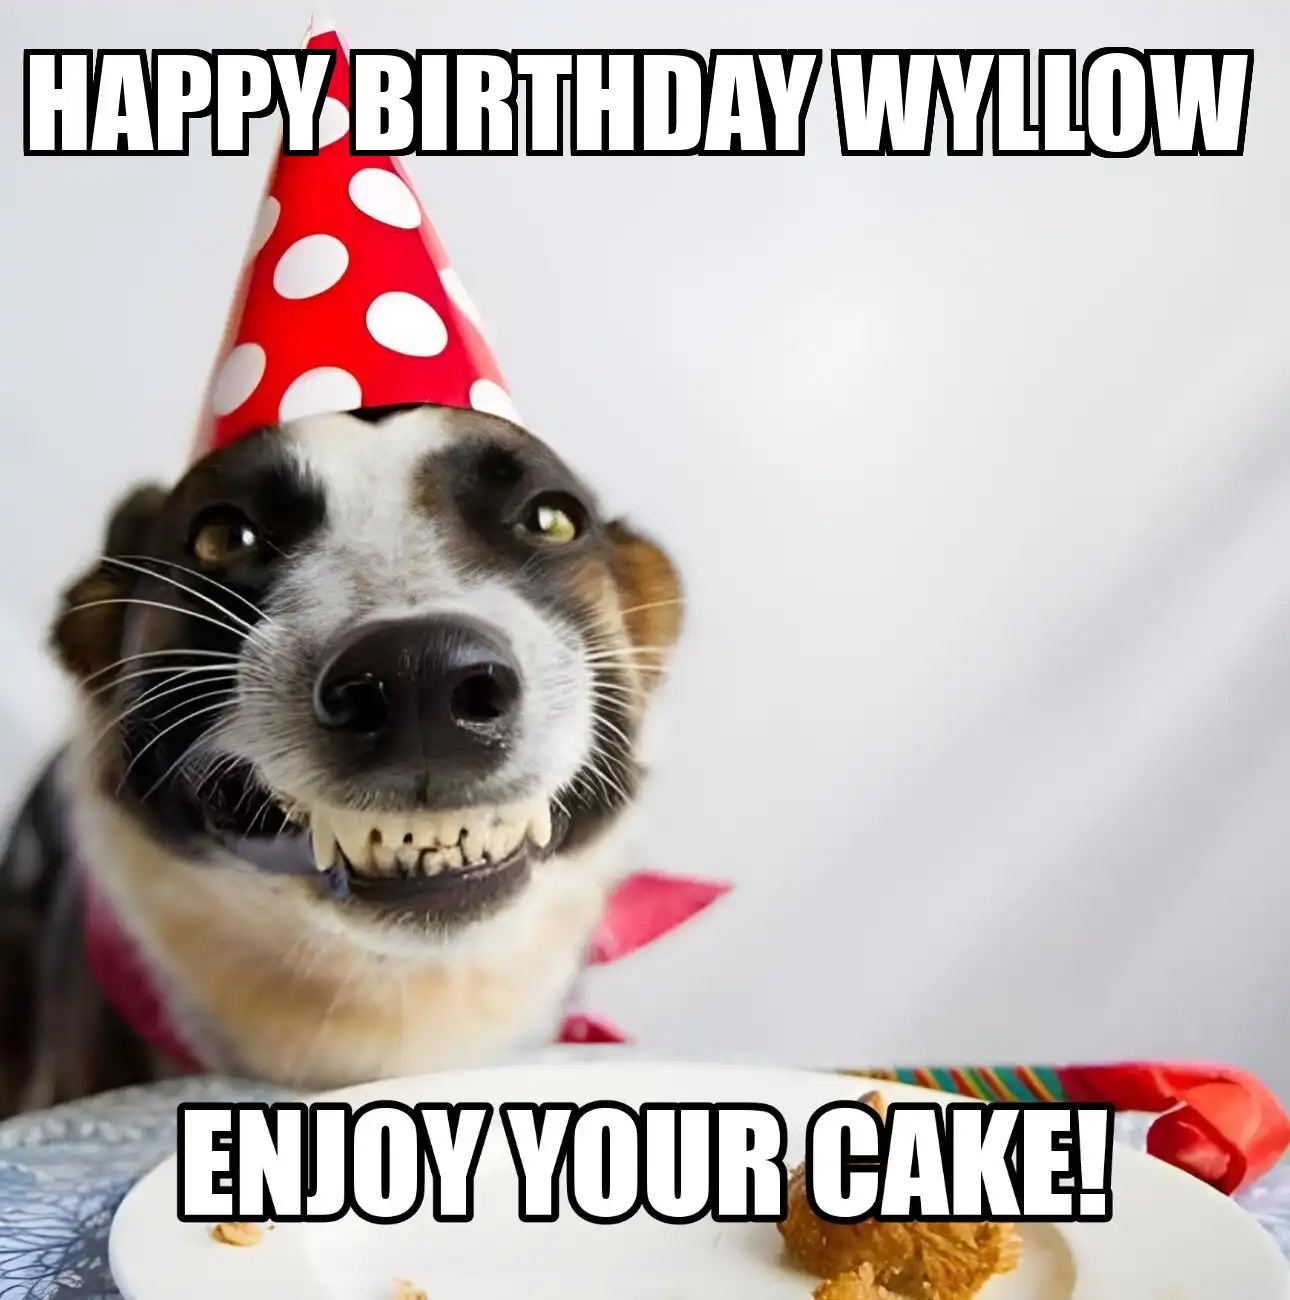 Happy Birthday Wyllow Enjoy Your Cake Dog Meme